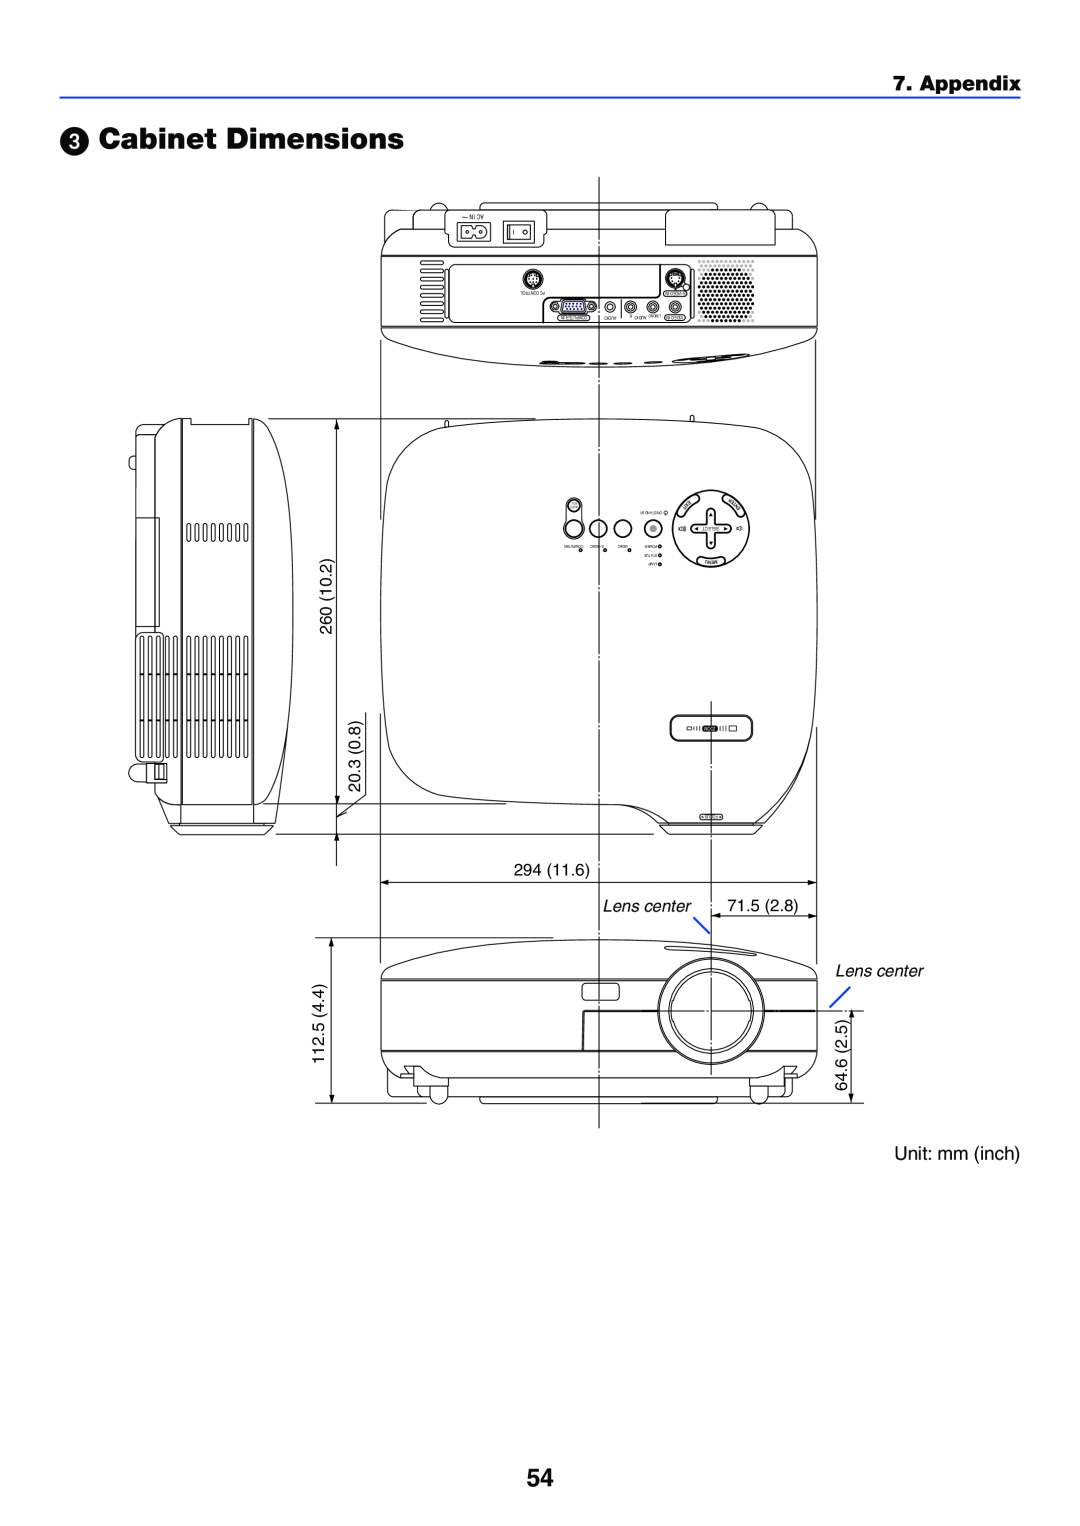 NEC VT37 manual Cabinet Dimensions, Appendix, Lens center, 71.5, In Ac, Zoom, Focus 